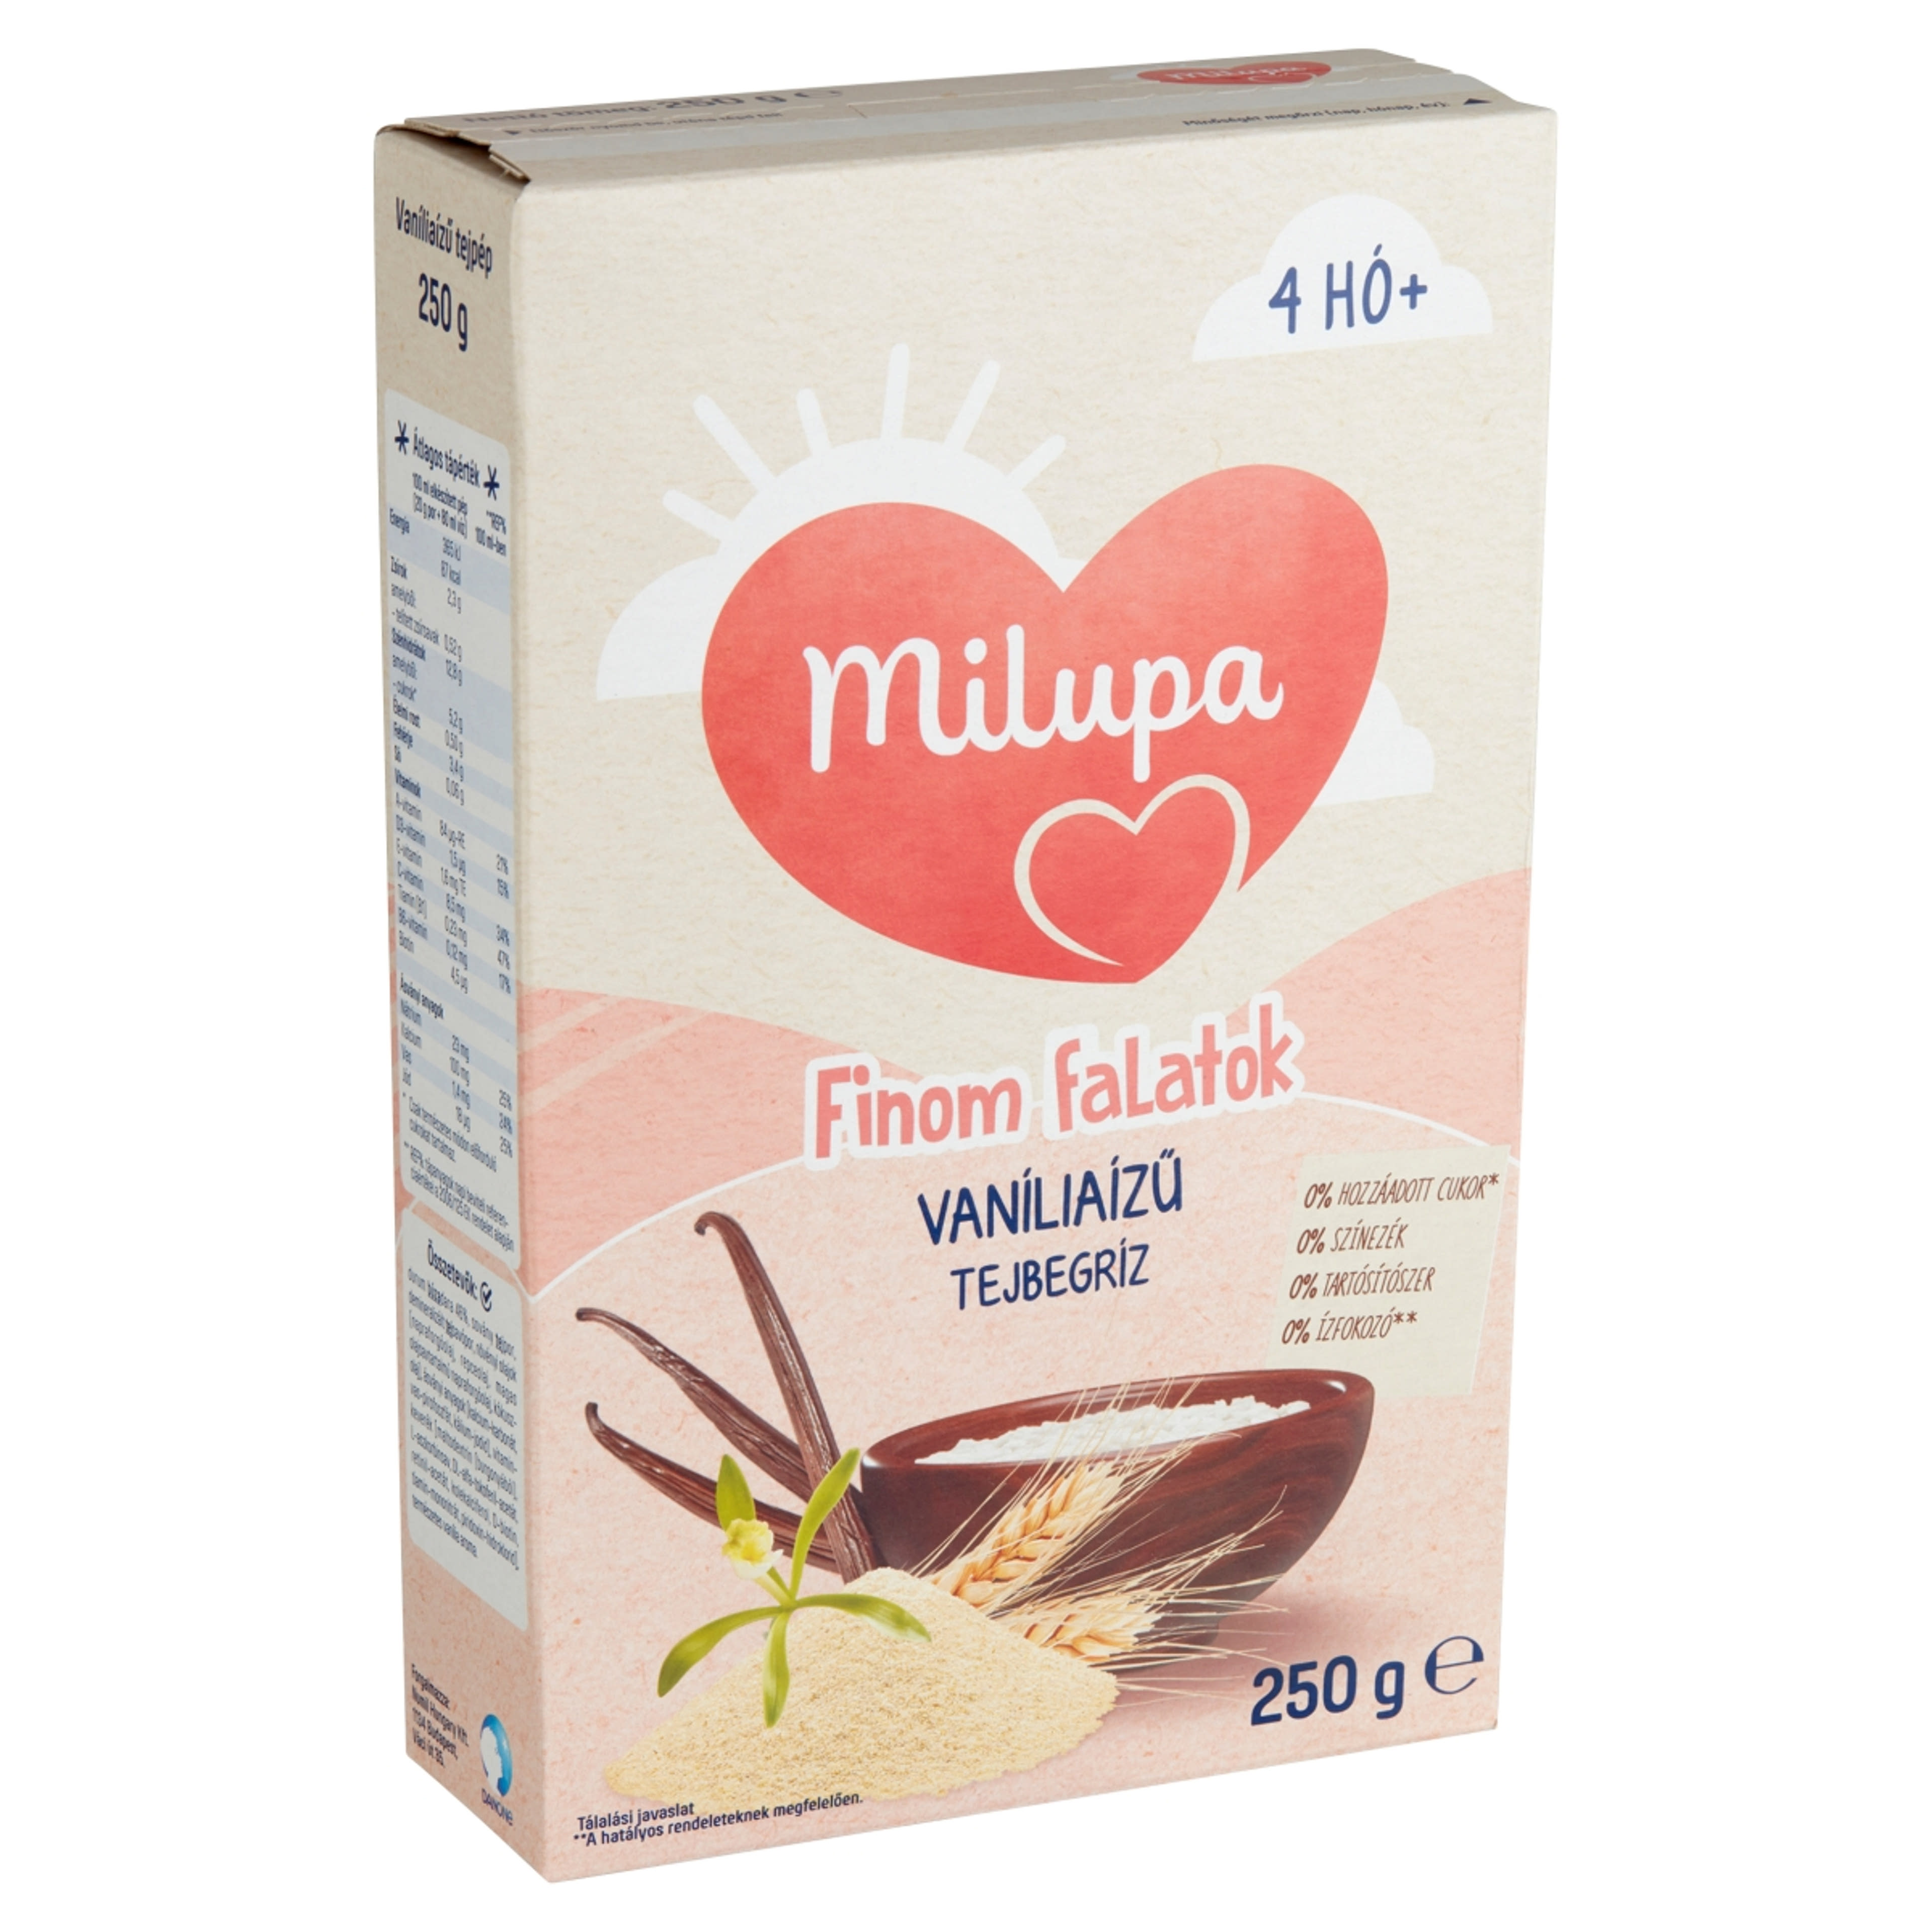 Milupa finom falatok vanilia ízű tejbegríz 4 hónapos kortól - 250 g-2